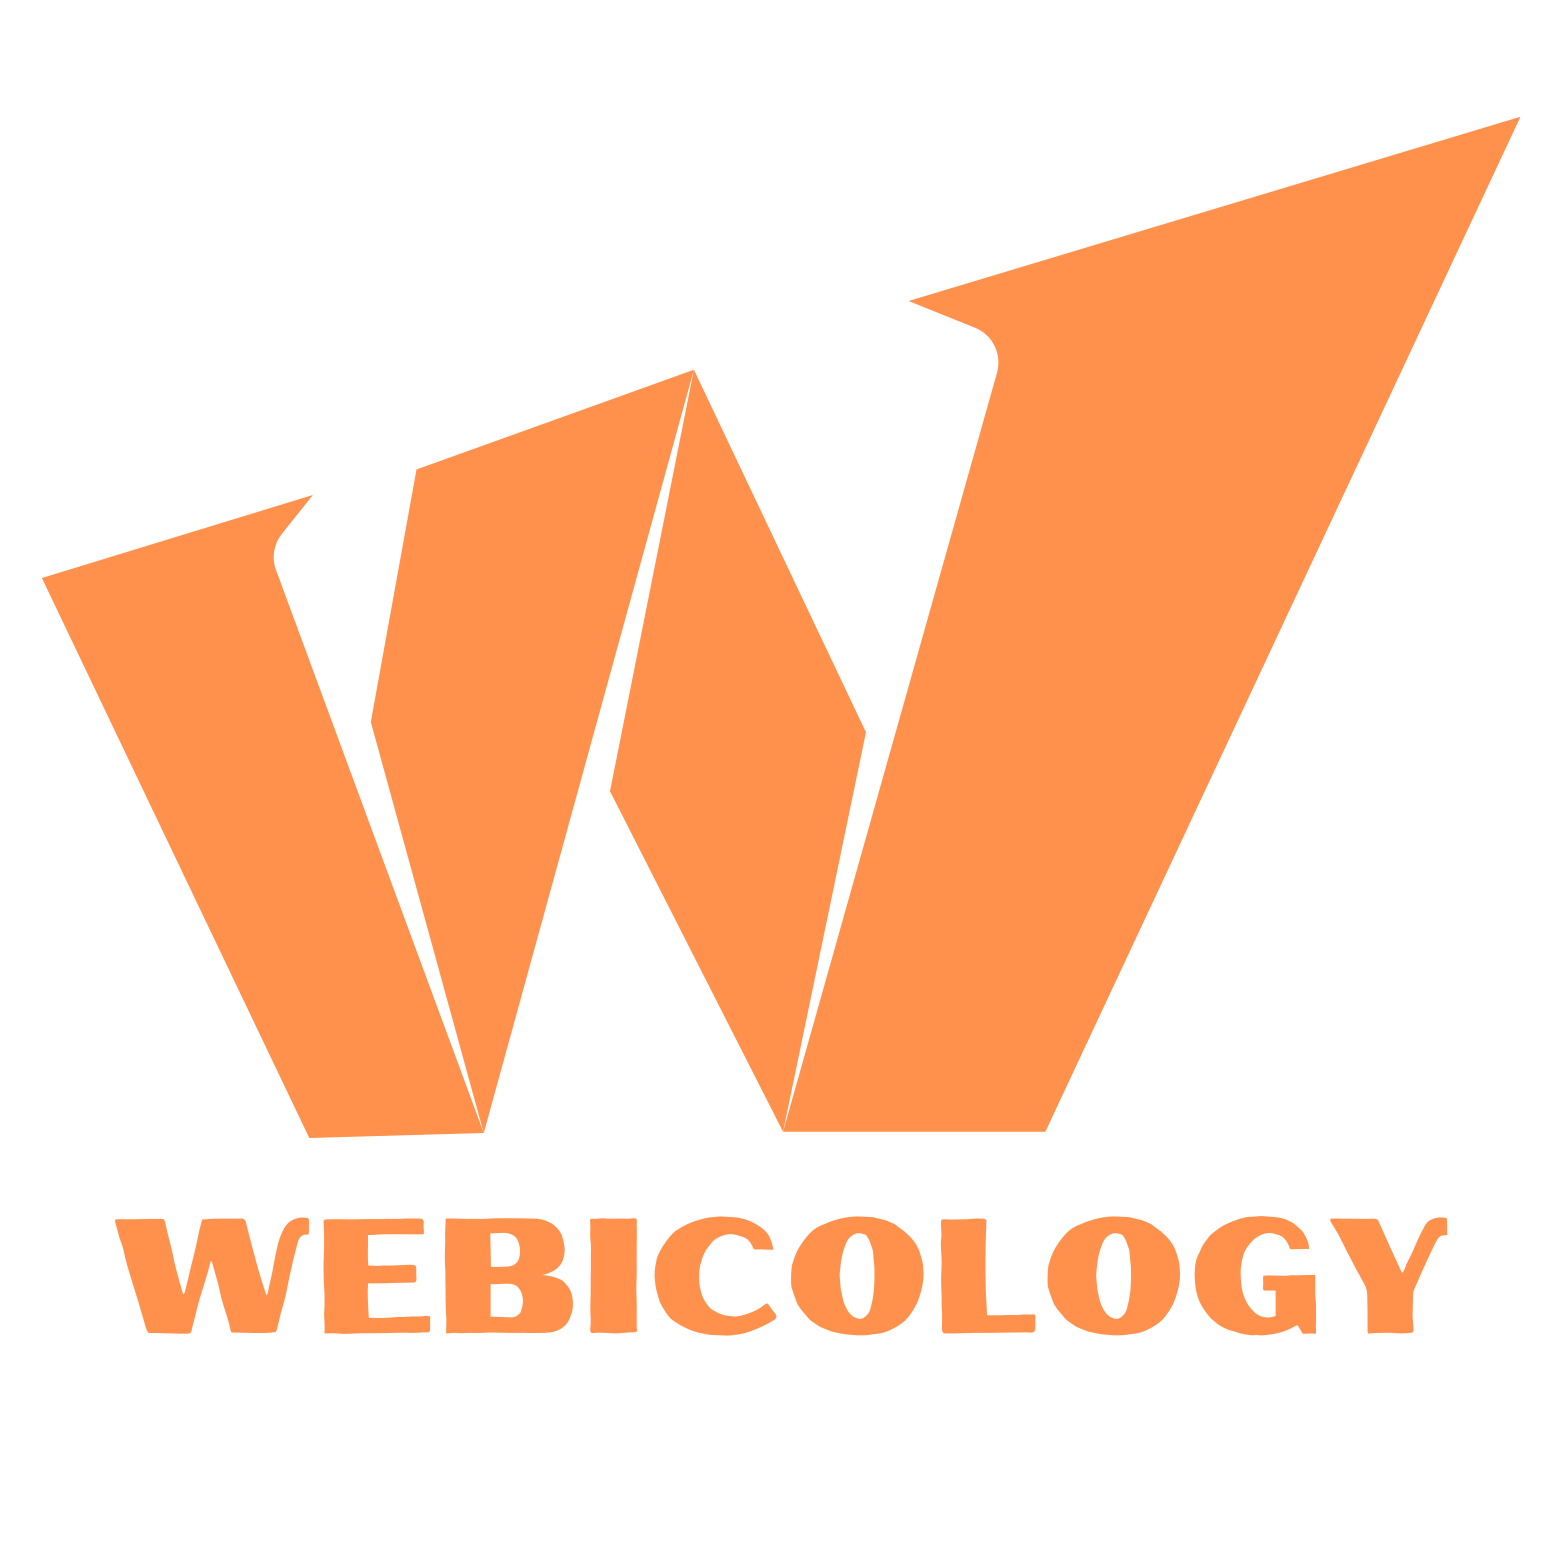 WEBICOLOGY